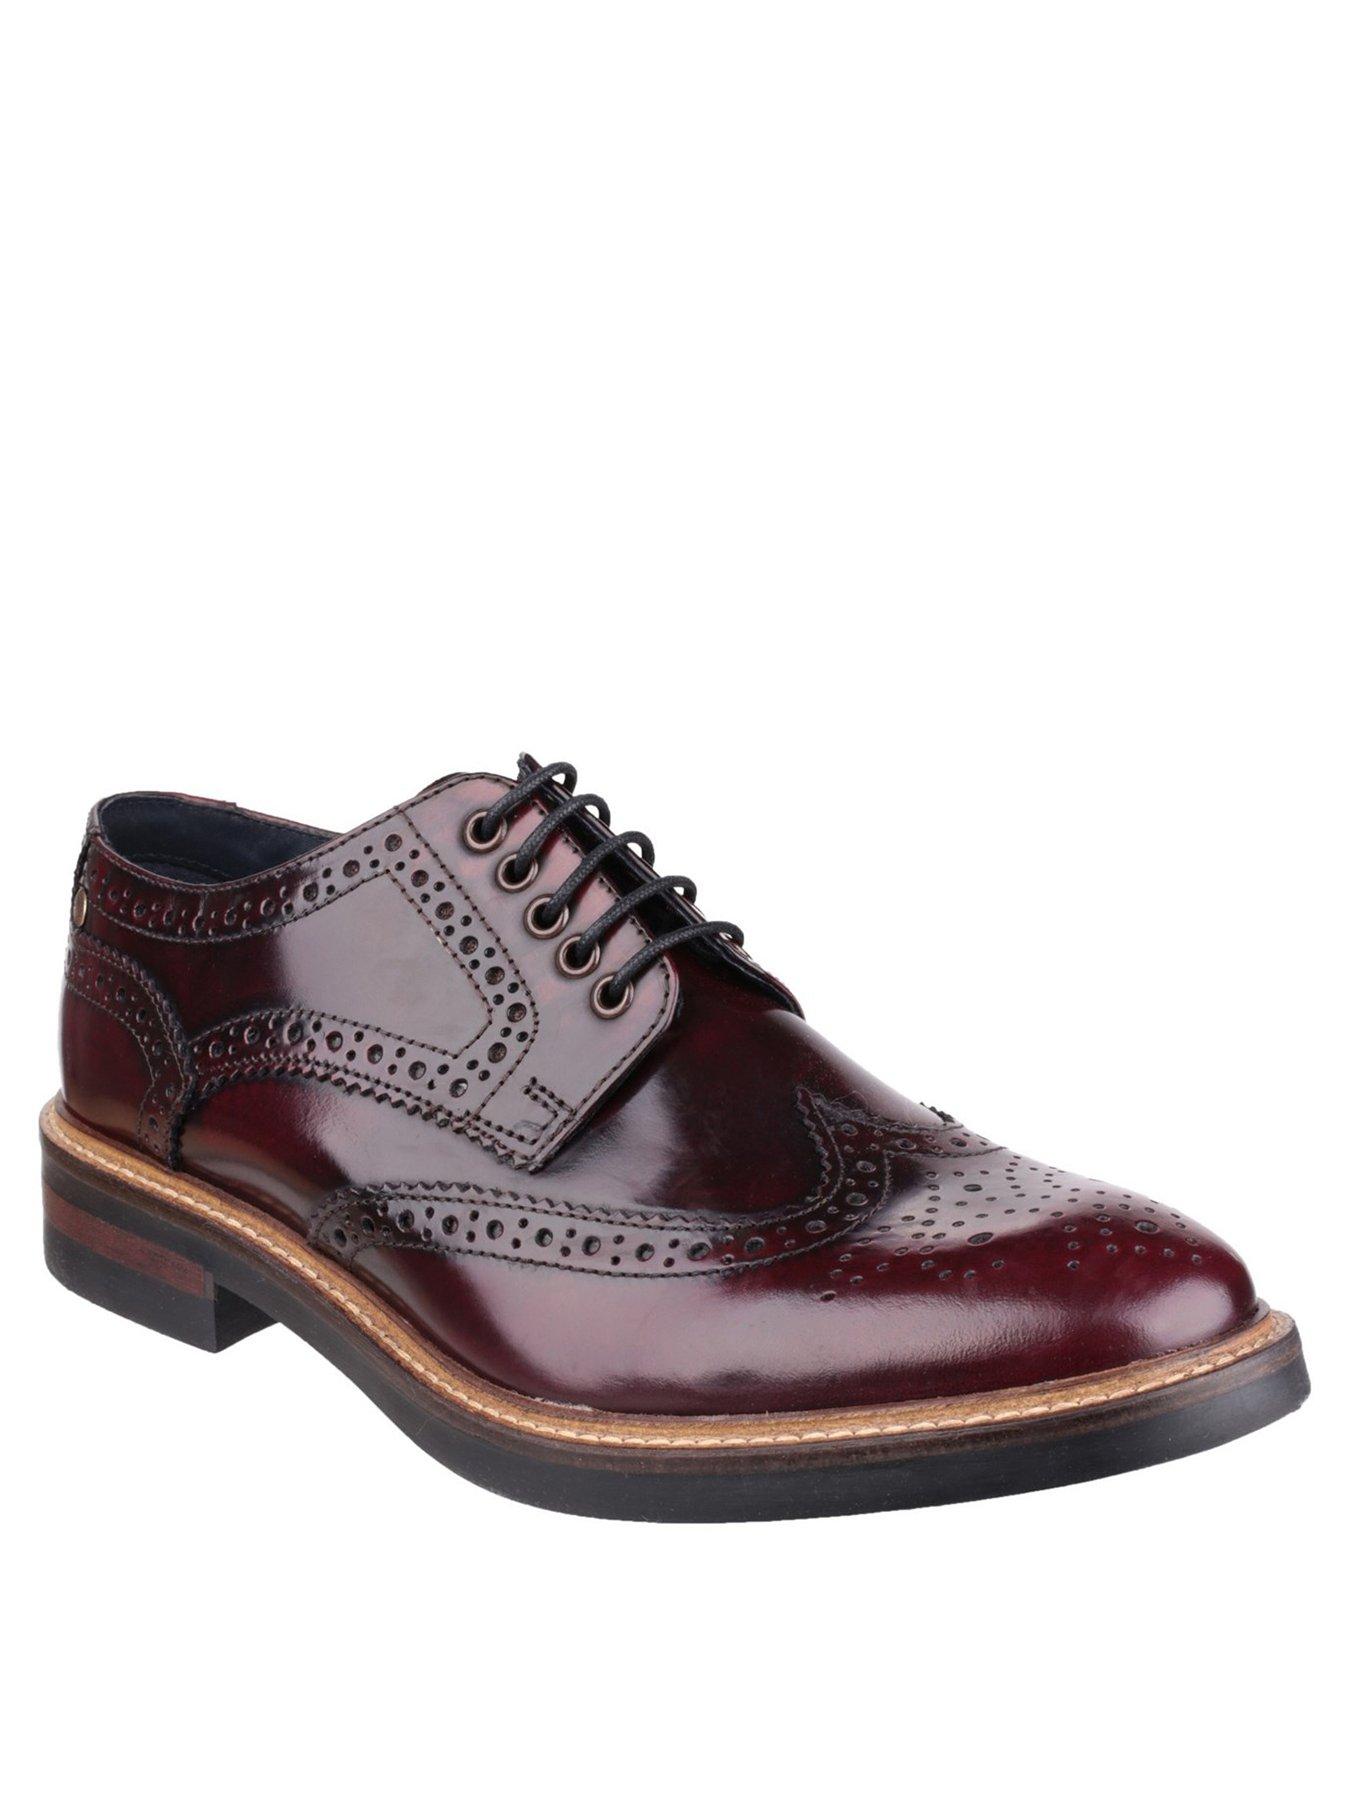 ROCKLAND shoes MEN FASHION Footwear Lace up discount 66% Brown 43                  EU 